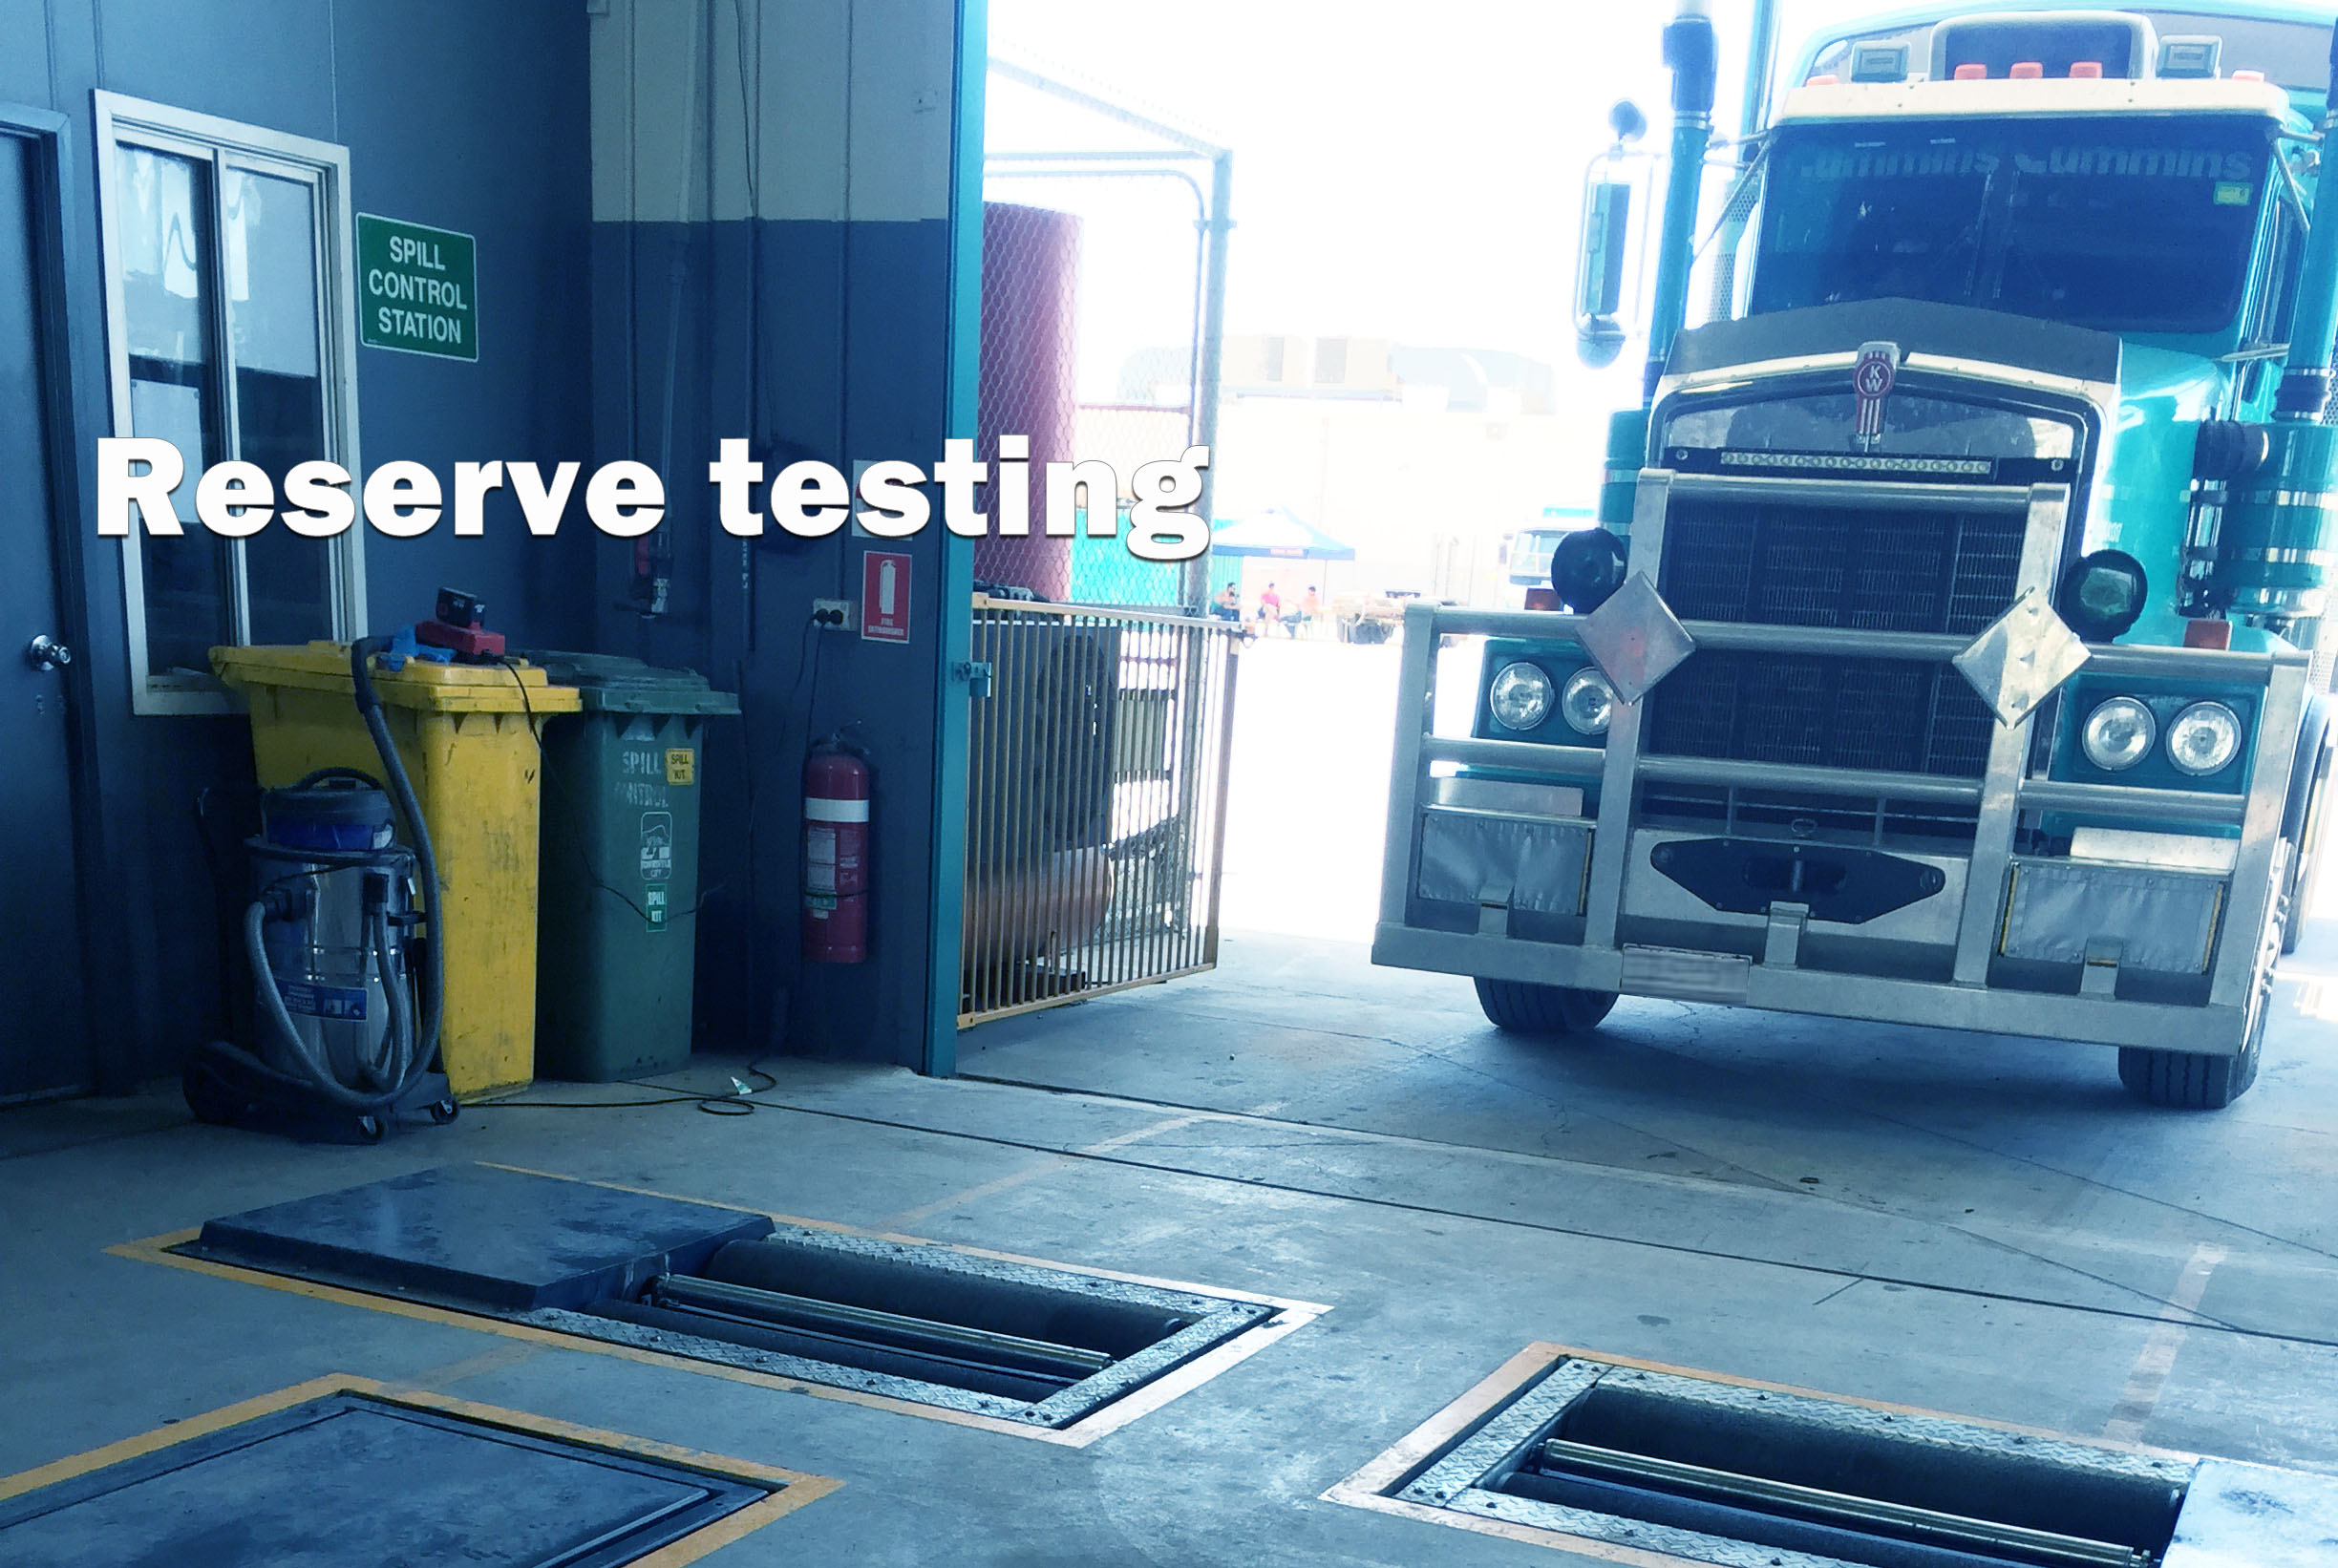 Reserve testing